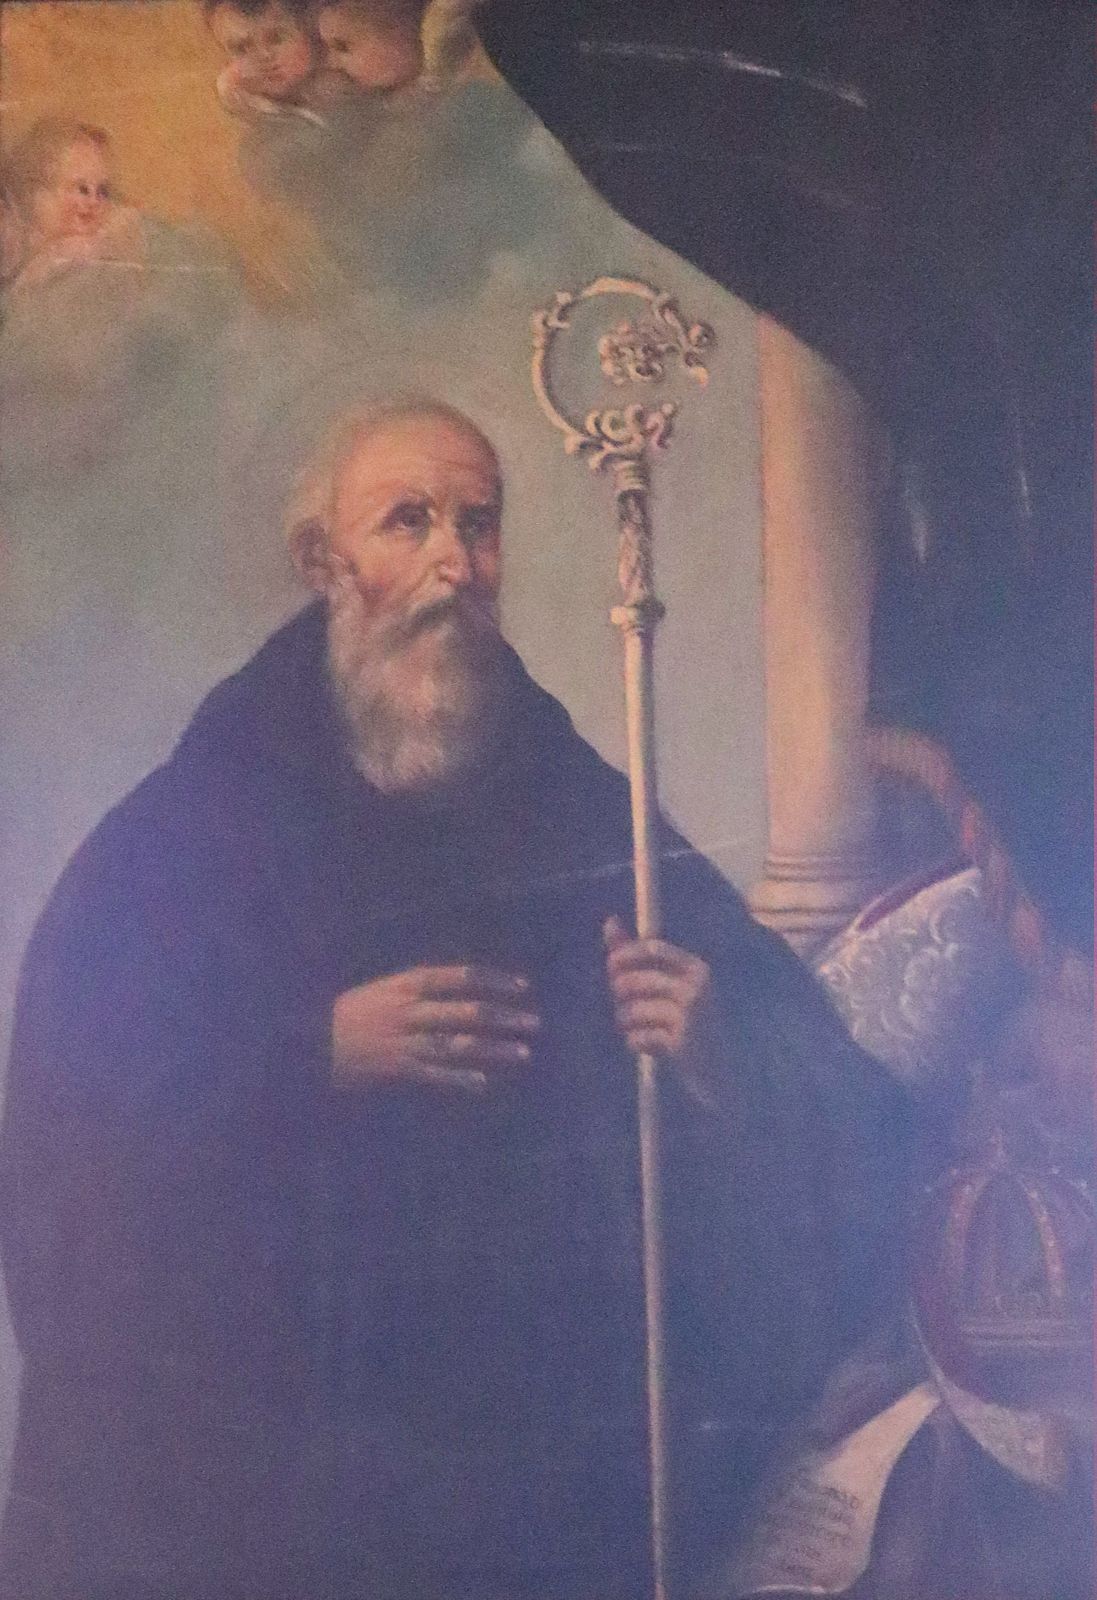 Bild in der Pfarrkirche San Silvestro in Fanano